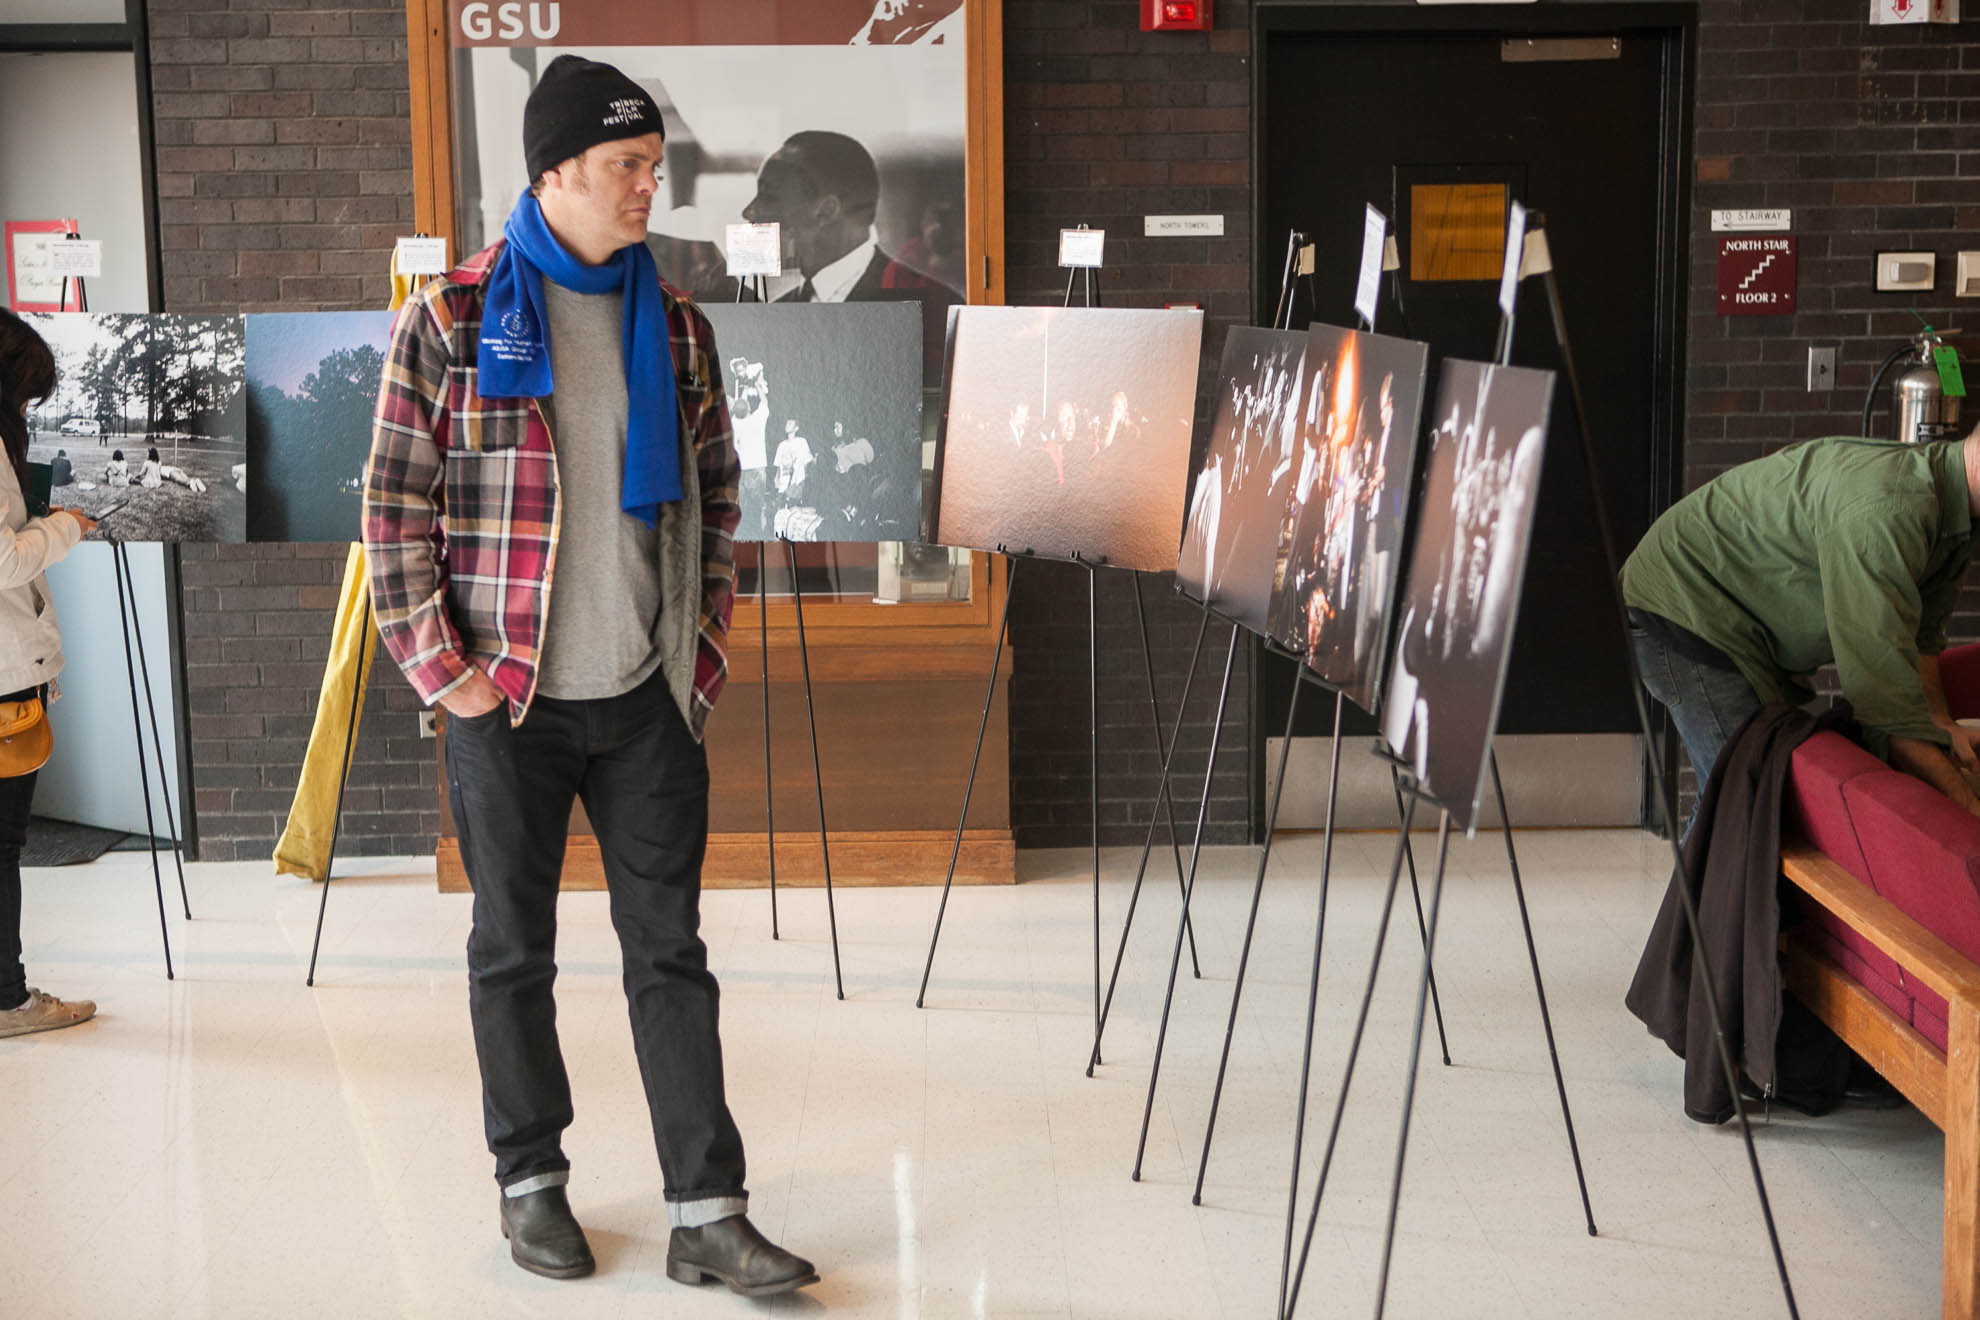 Rainn Wilson at death penalty exhibit